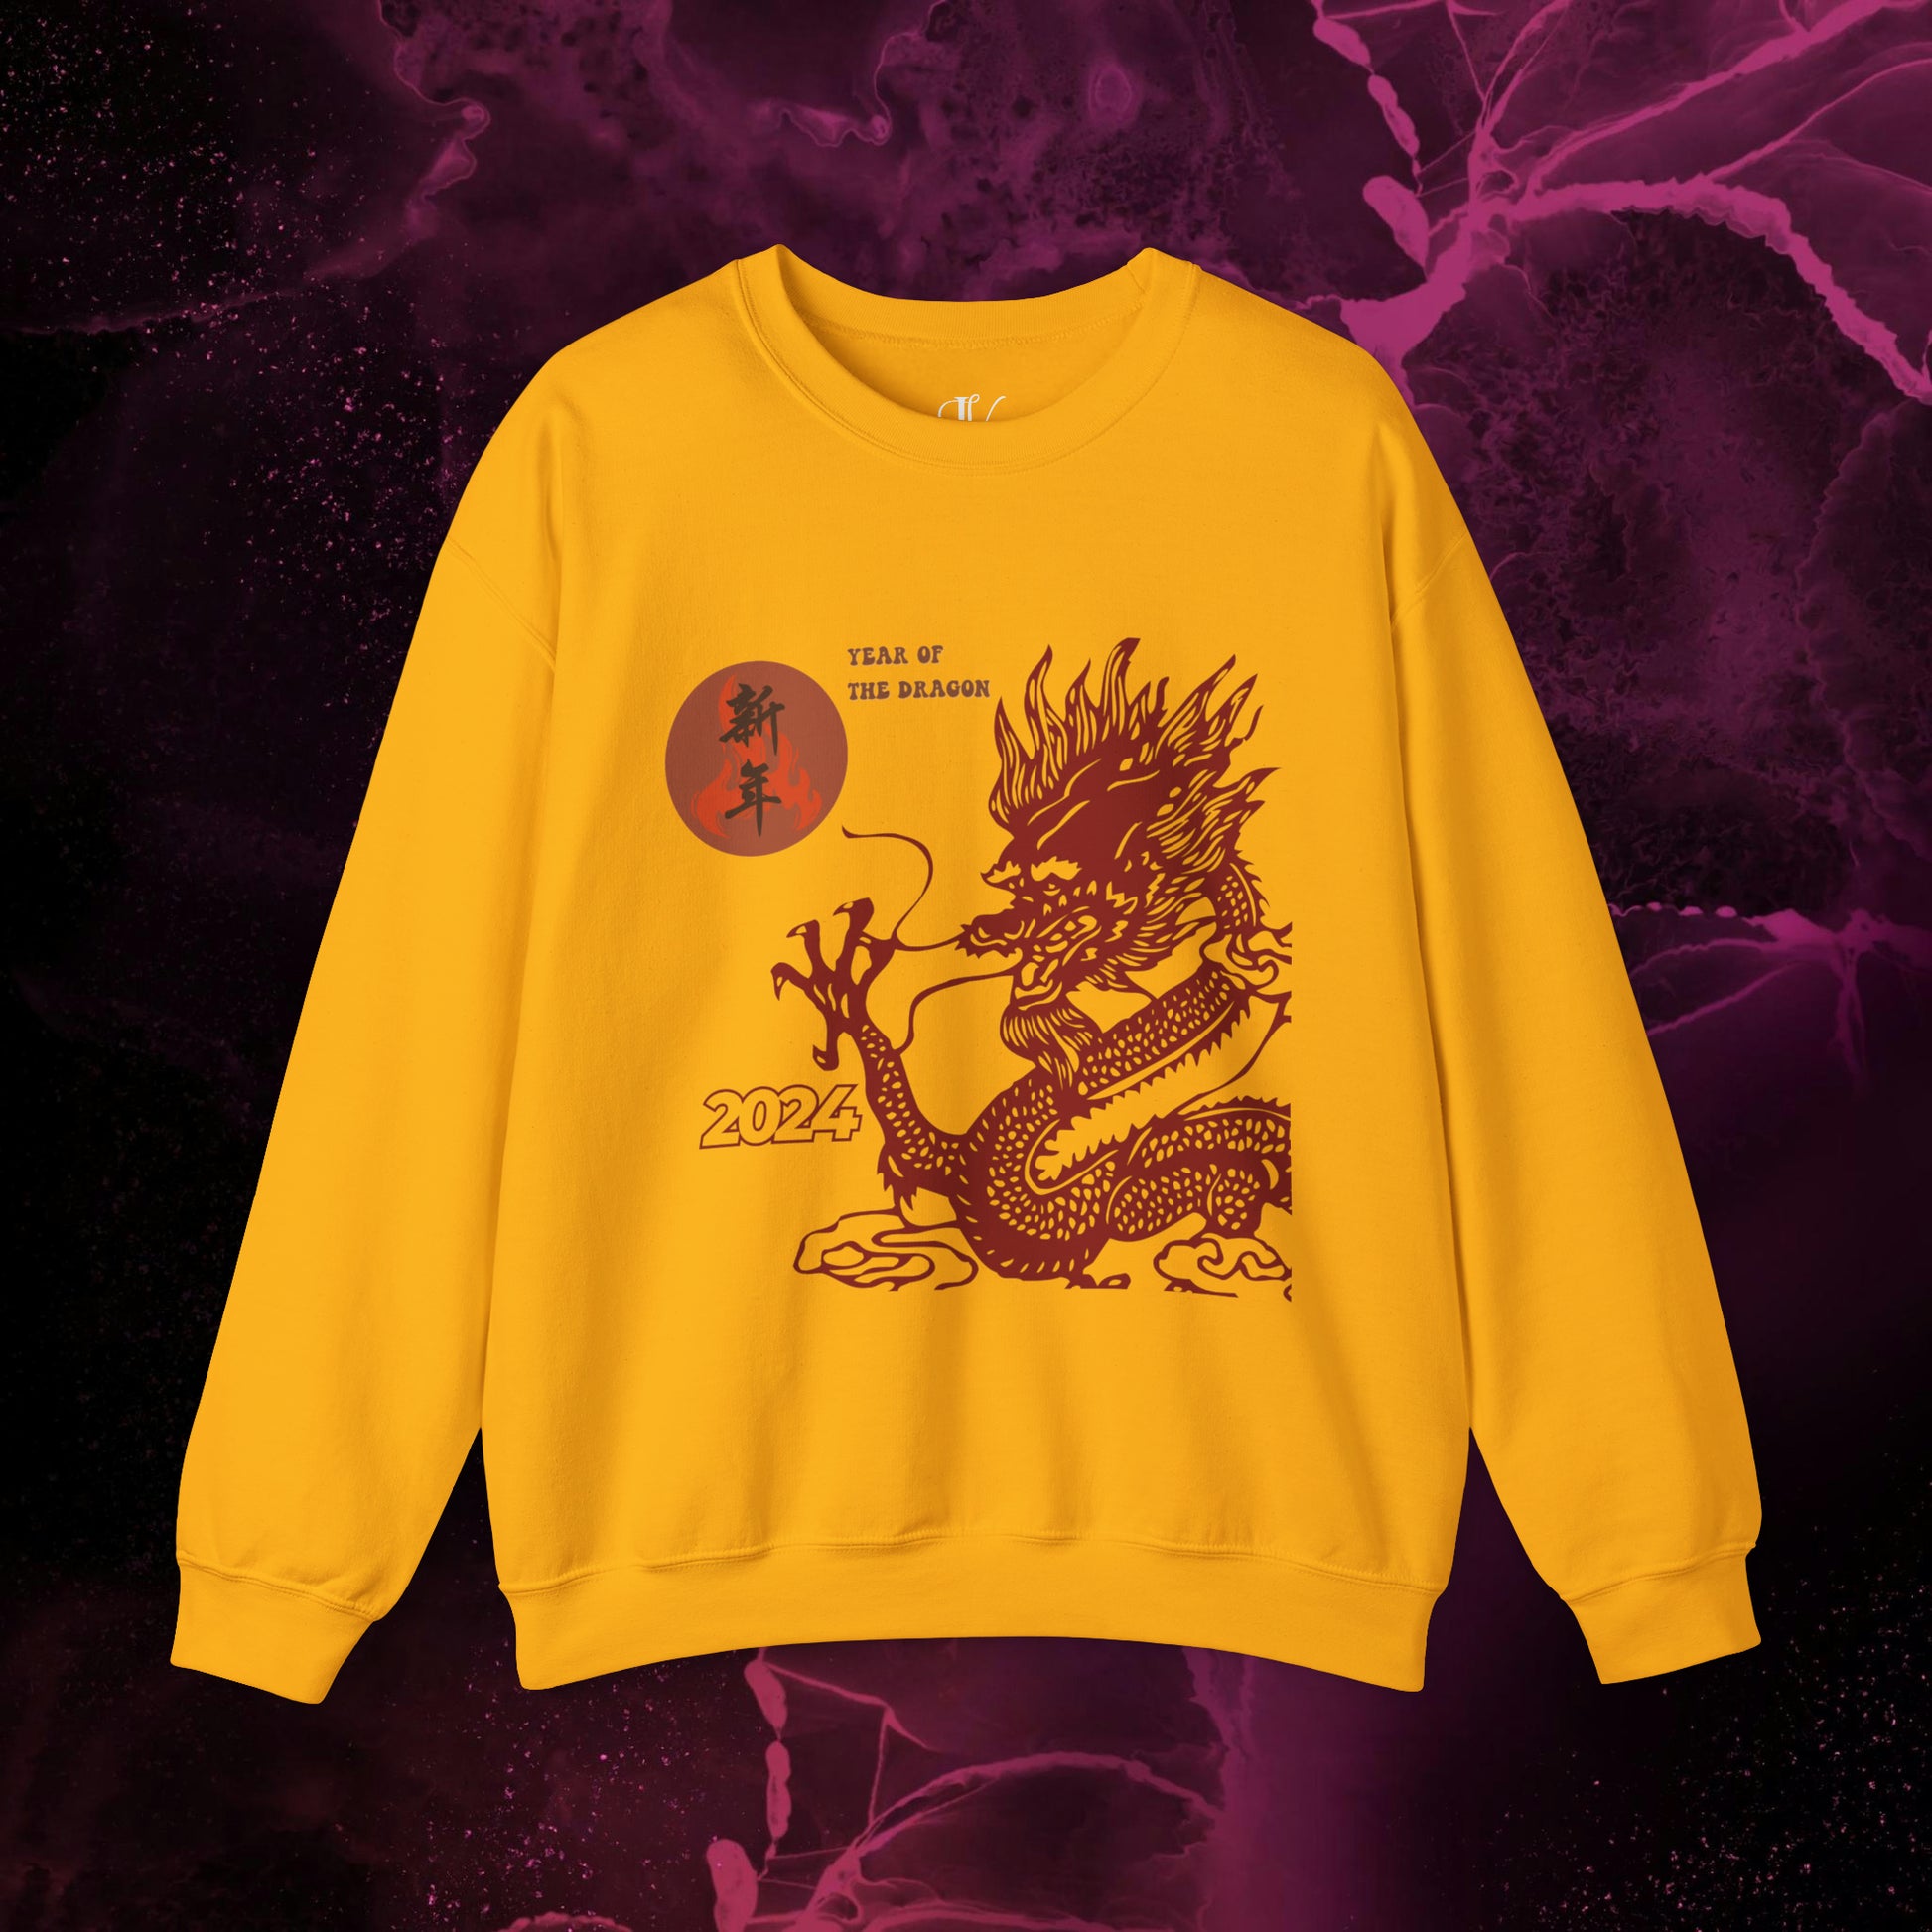 Year of the Dragon Sweatshirt - 2024 Chinese Zodiac Shirt for Lunar New Year Sweatshirt S Gold 